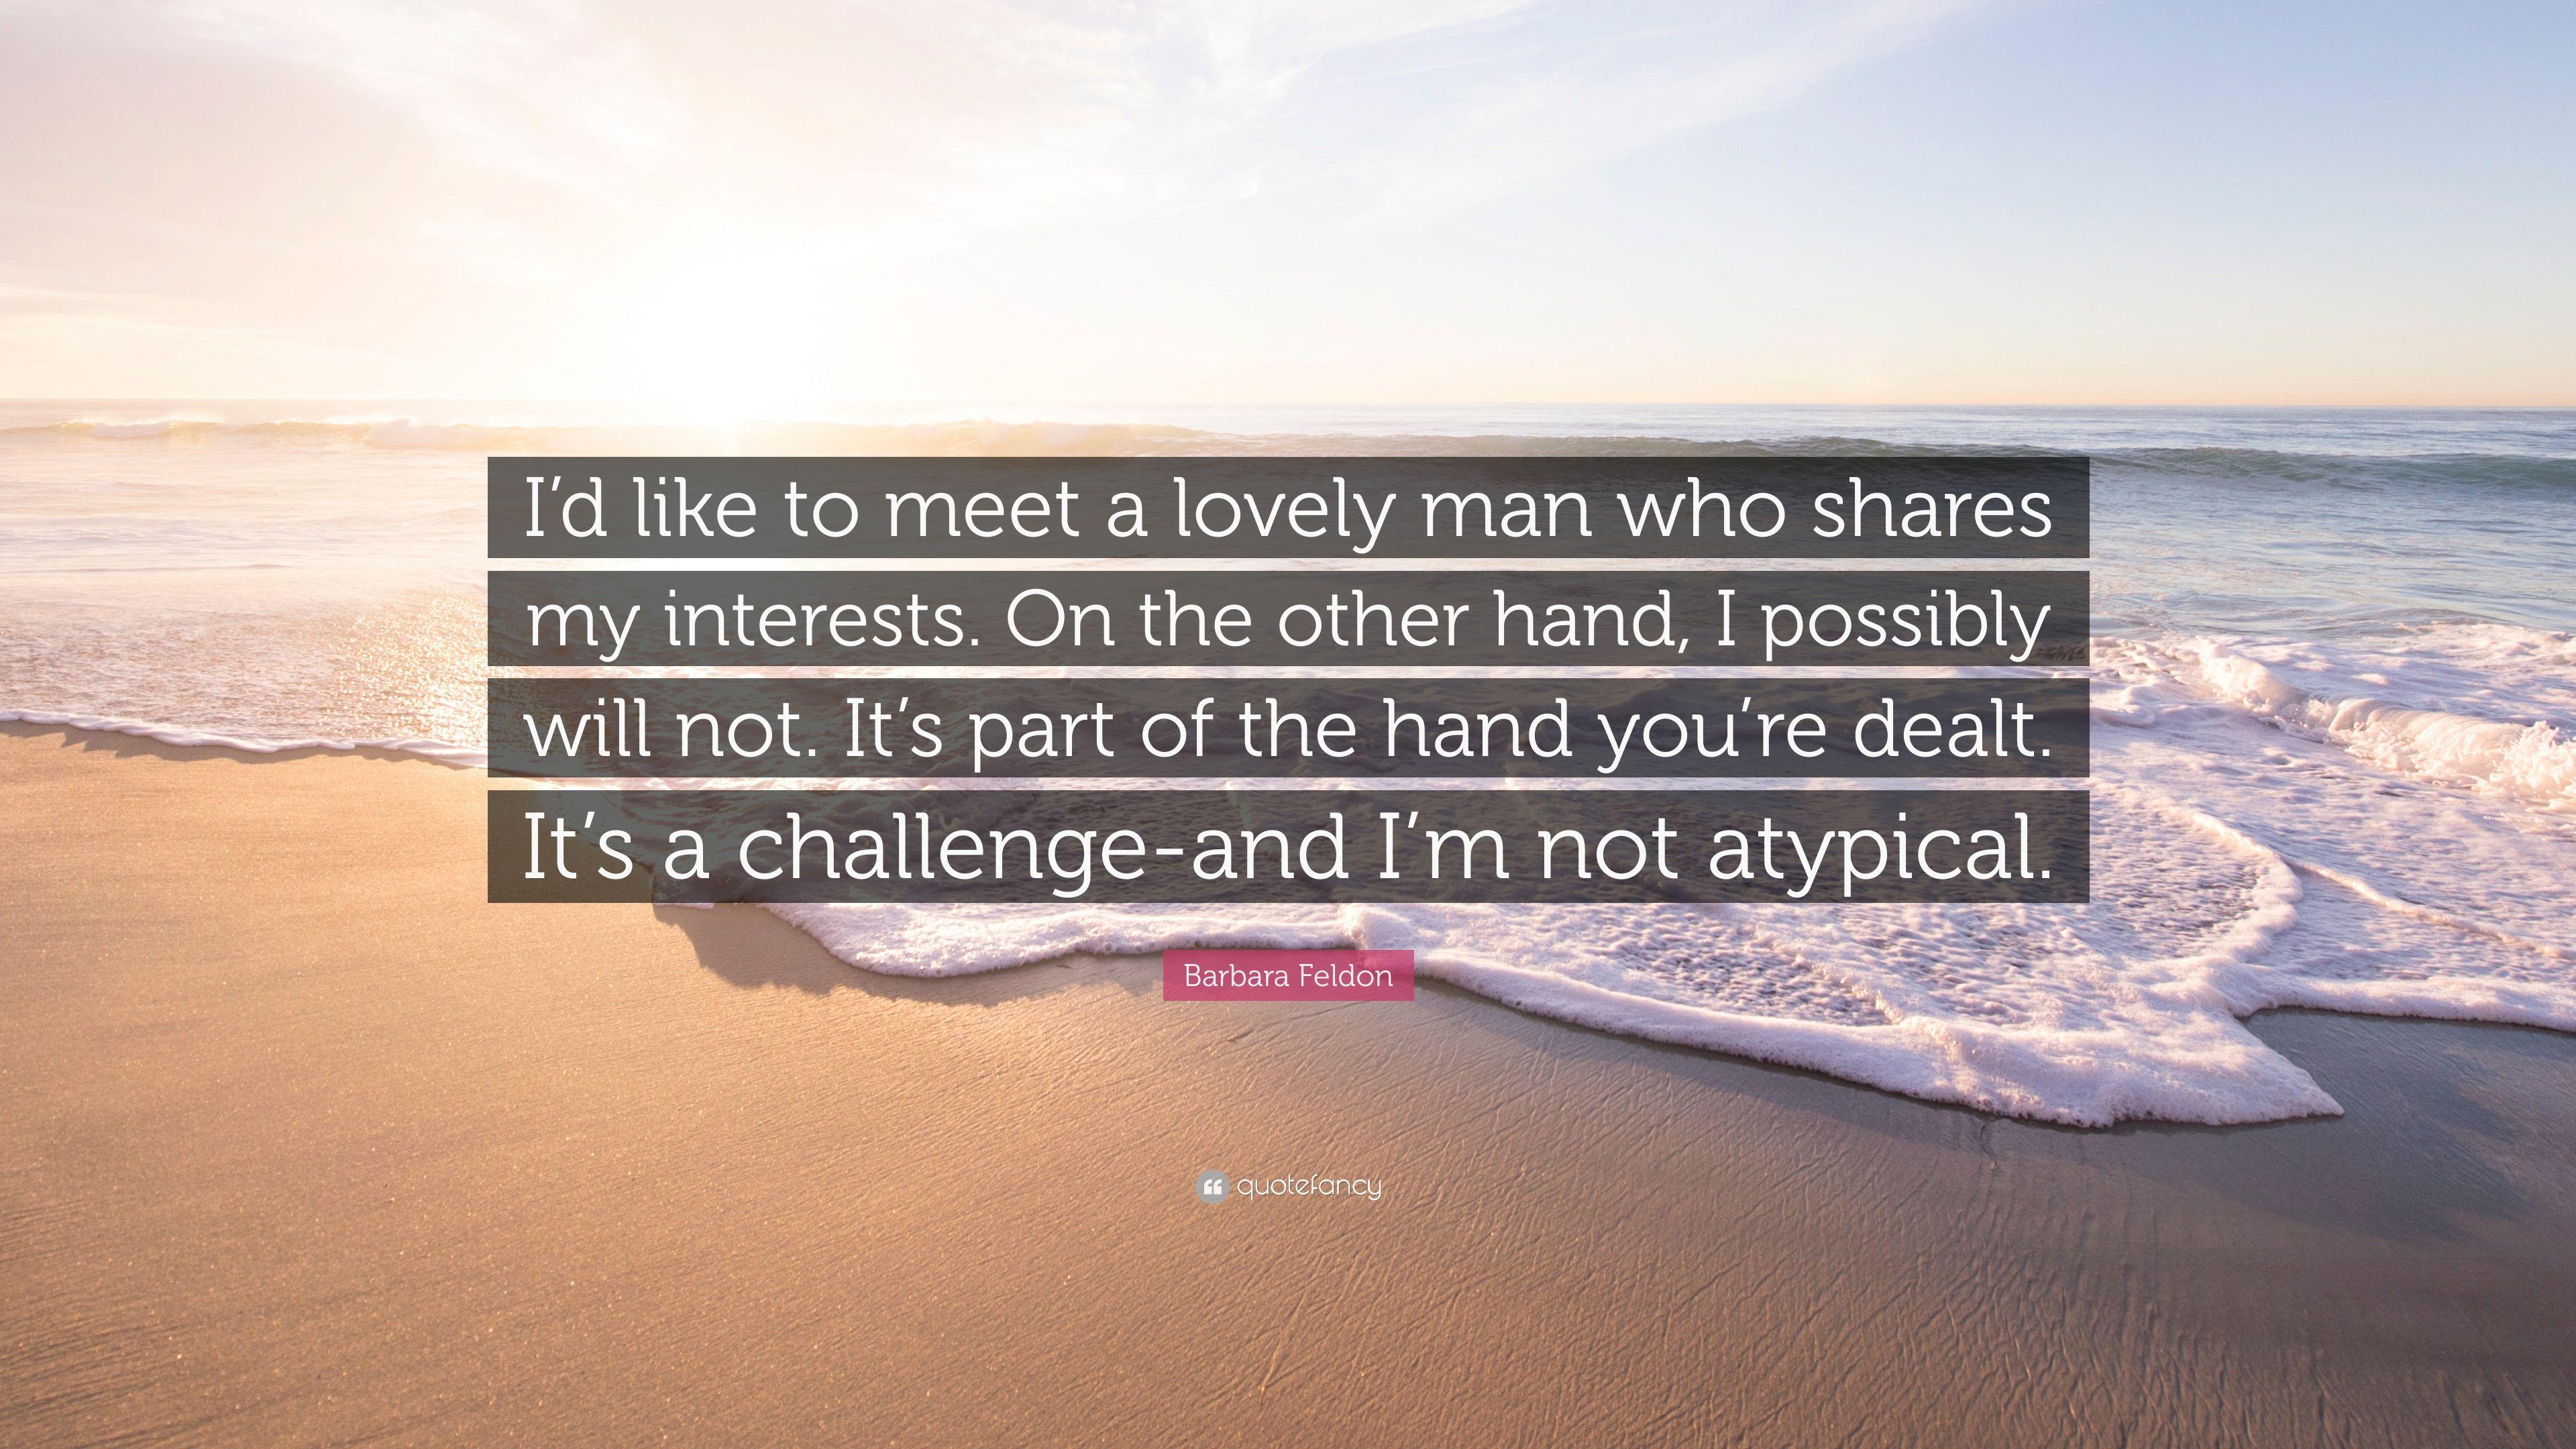 Barbara Feldon Quote: “I'd like to meet a lovely man who shares my